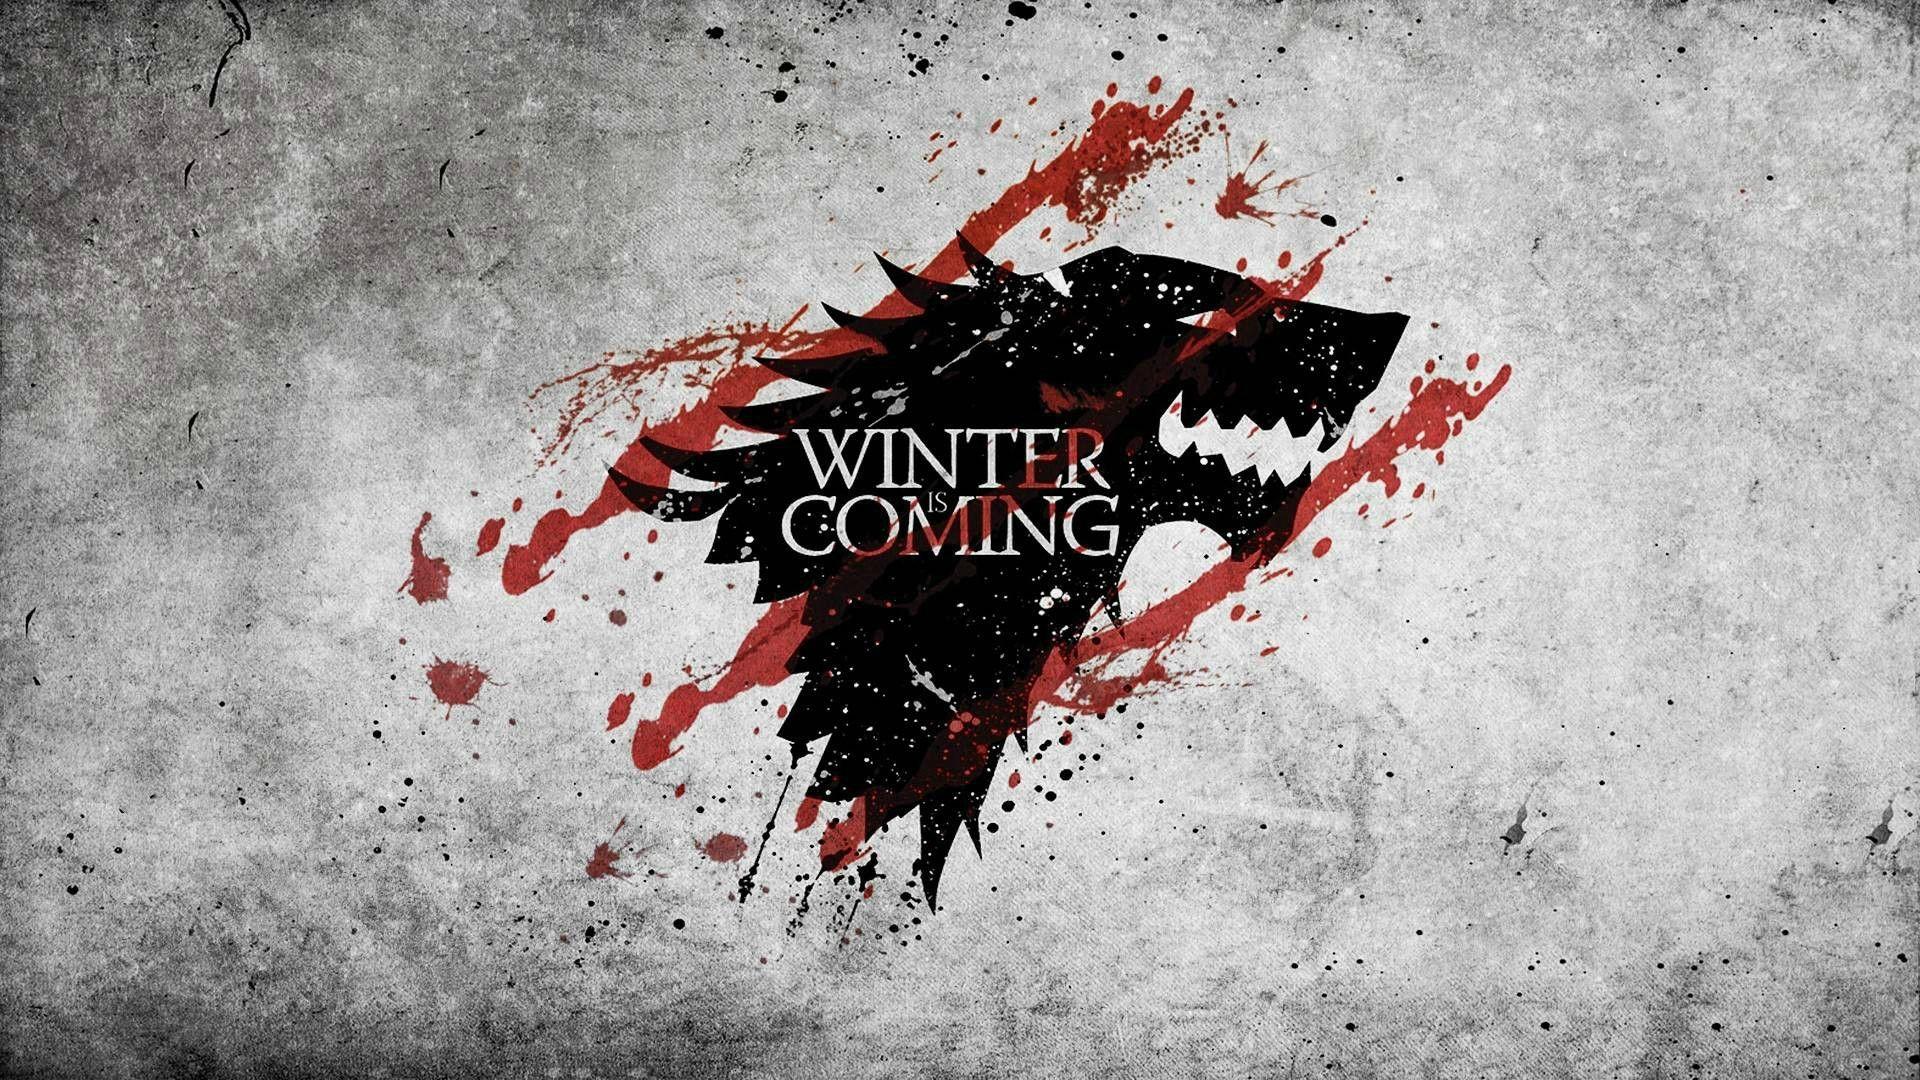 Game of Thrones House Stark Wallpaper. Winter is coming wallpaper, Game of thrones winter, Game of thrones instagram